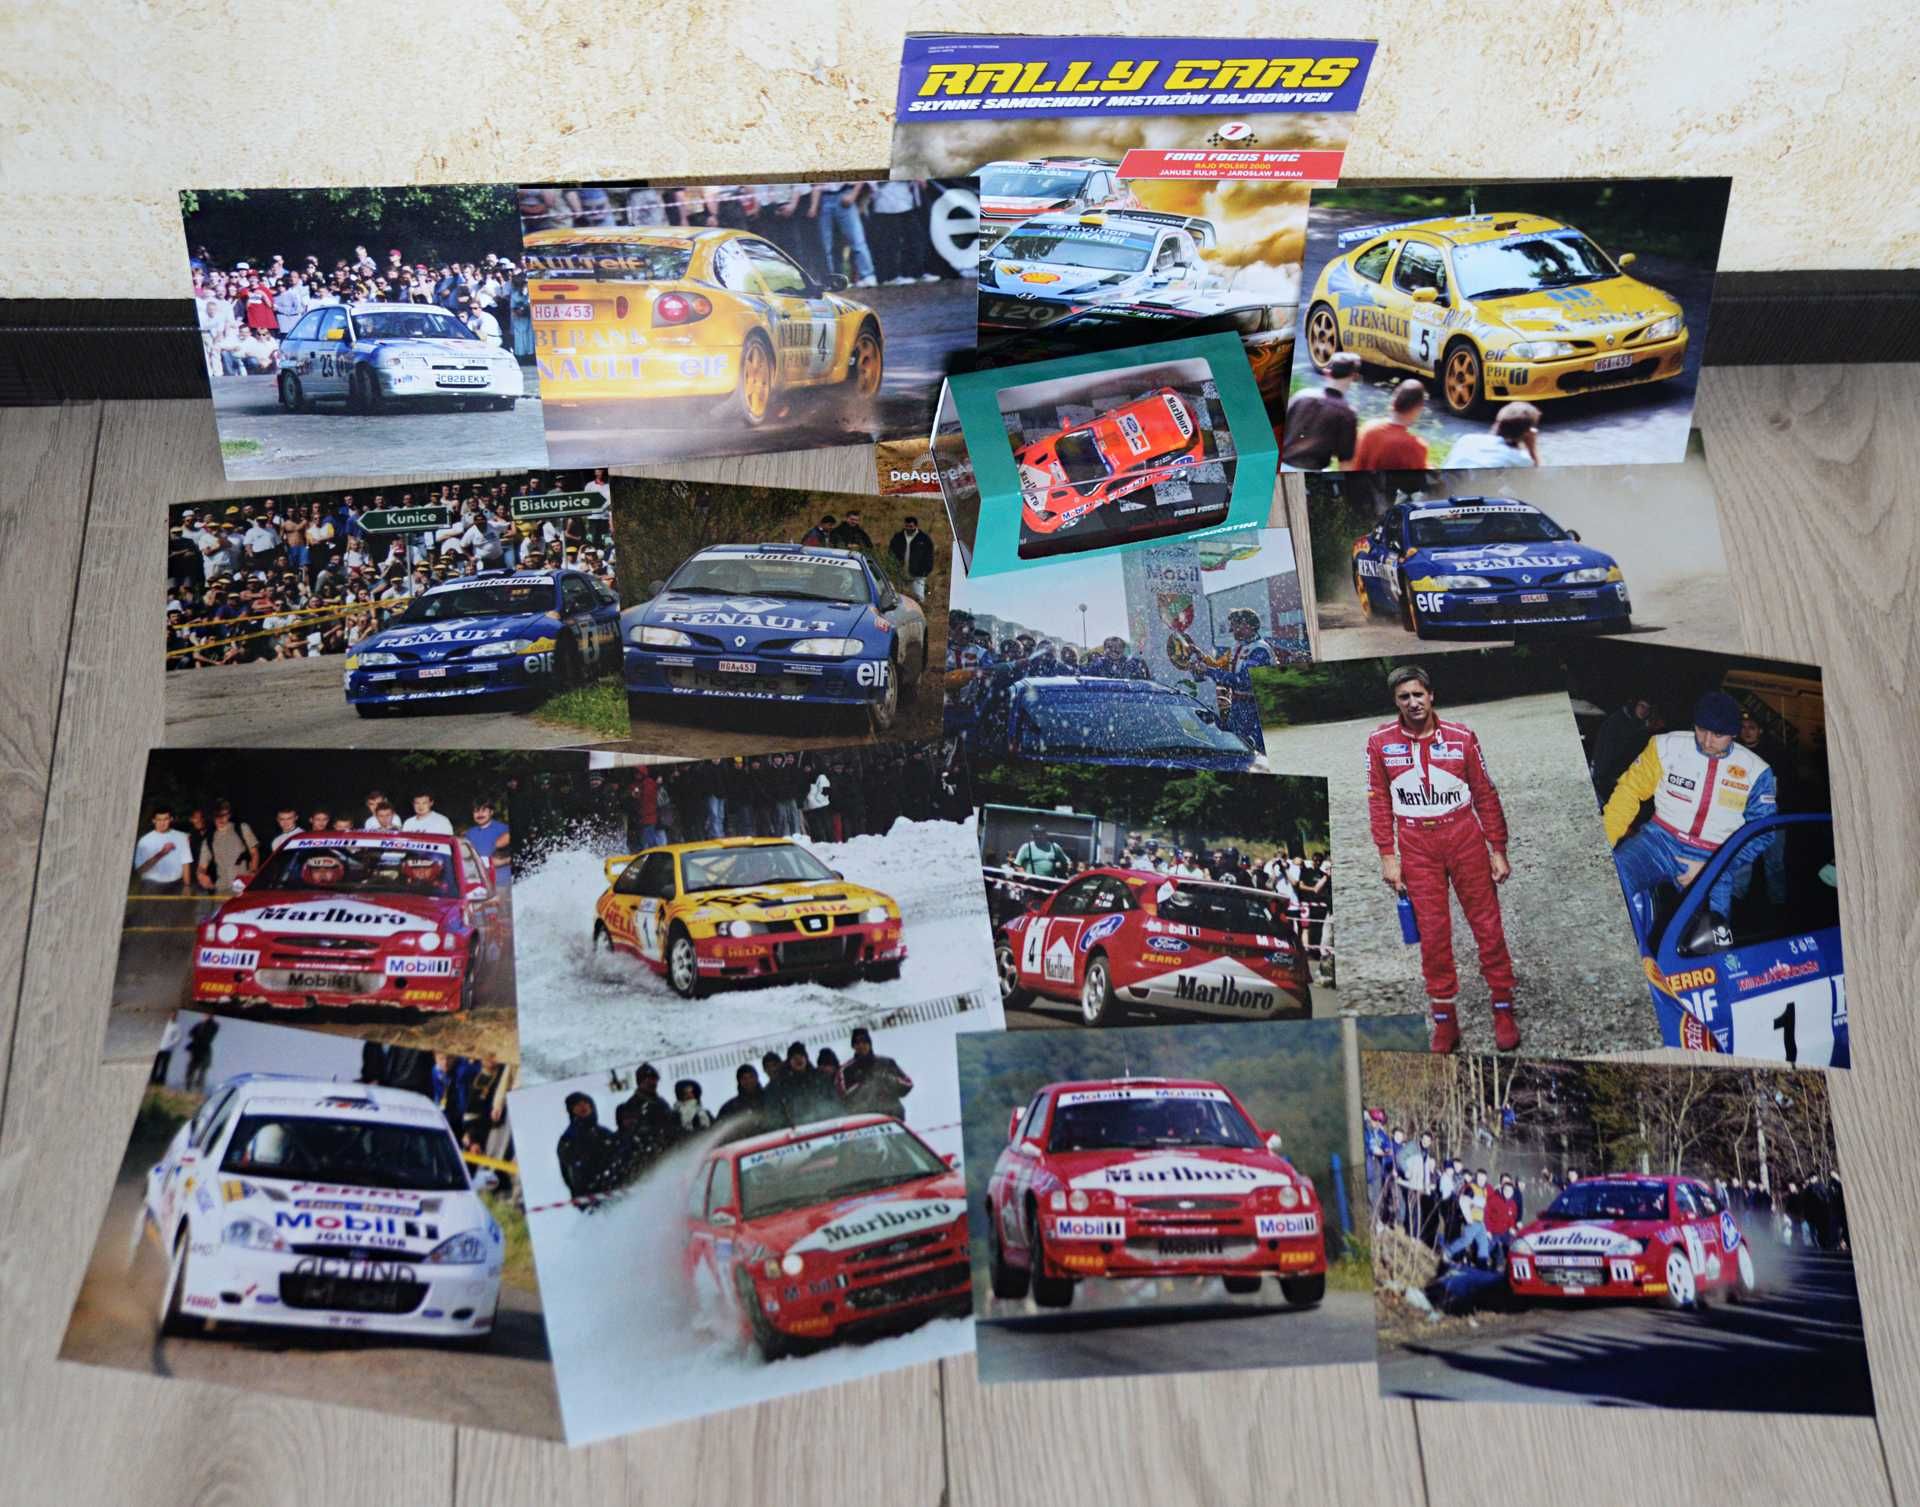 Janusz KULIG PAKIET model Rally Cars Focus WRC + 16 zdjęć 21x15